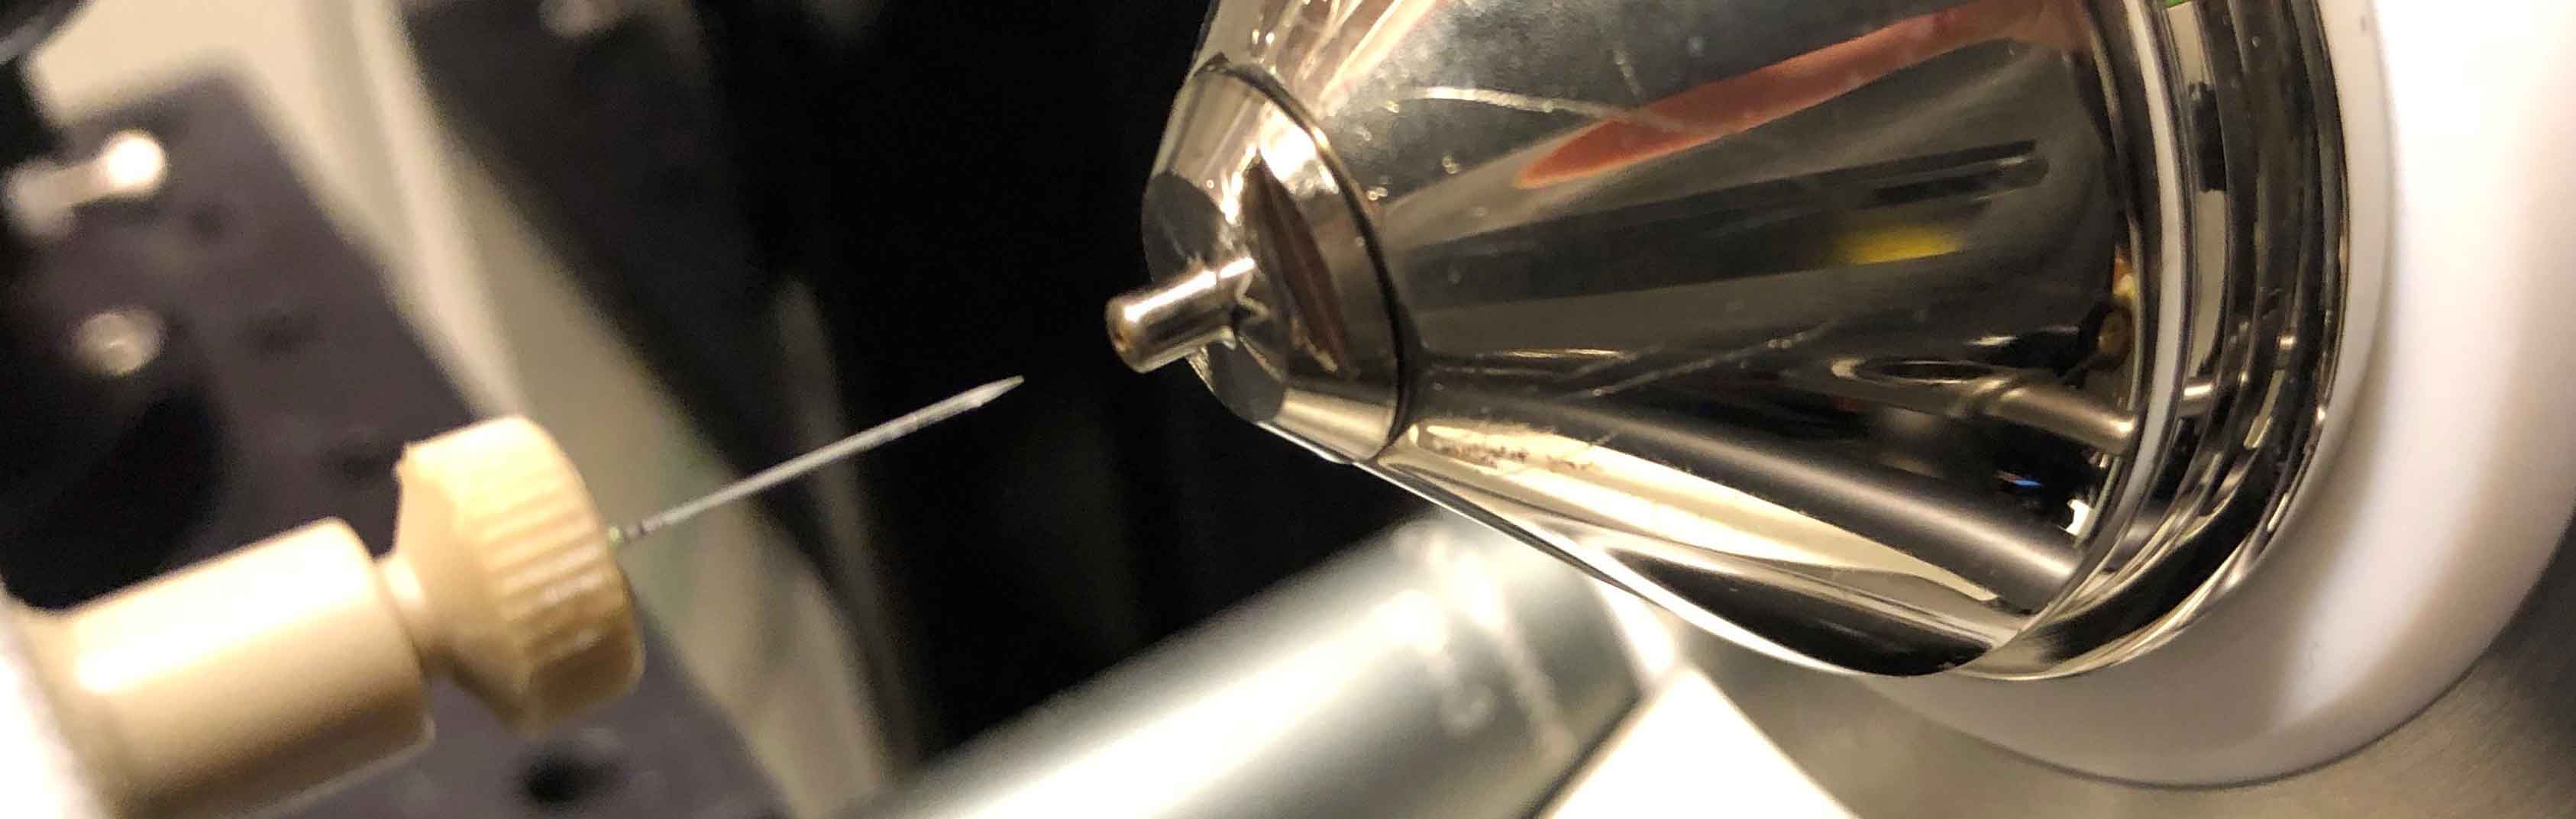 Dephoure lab instrument close-up.